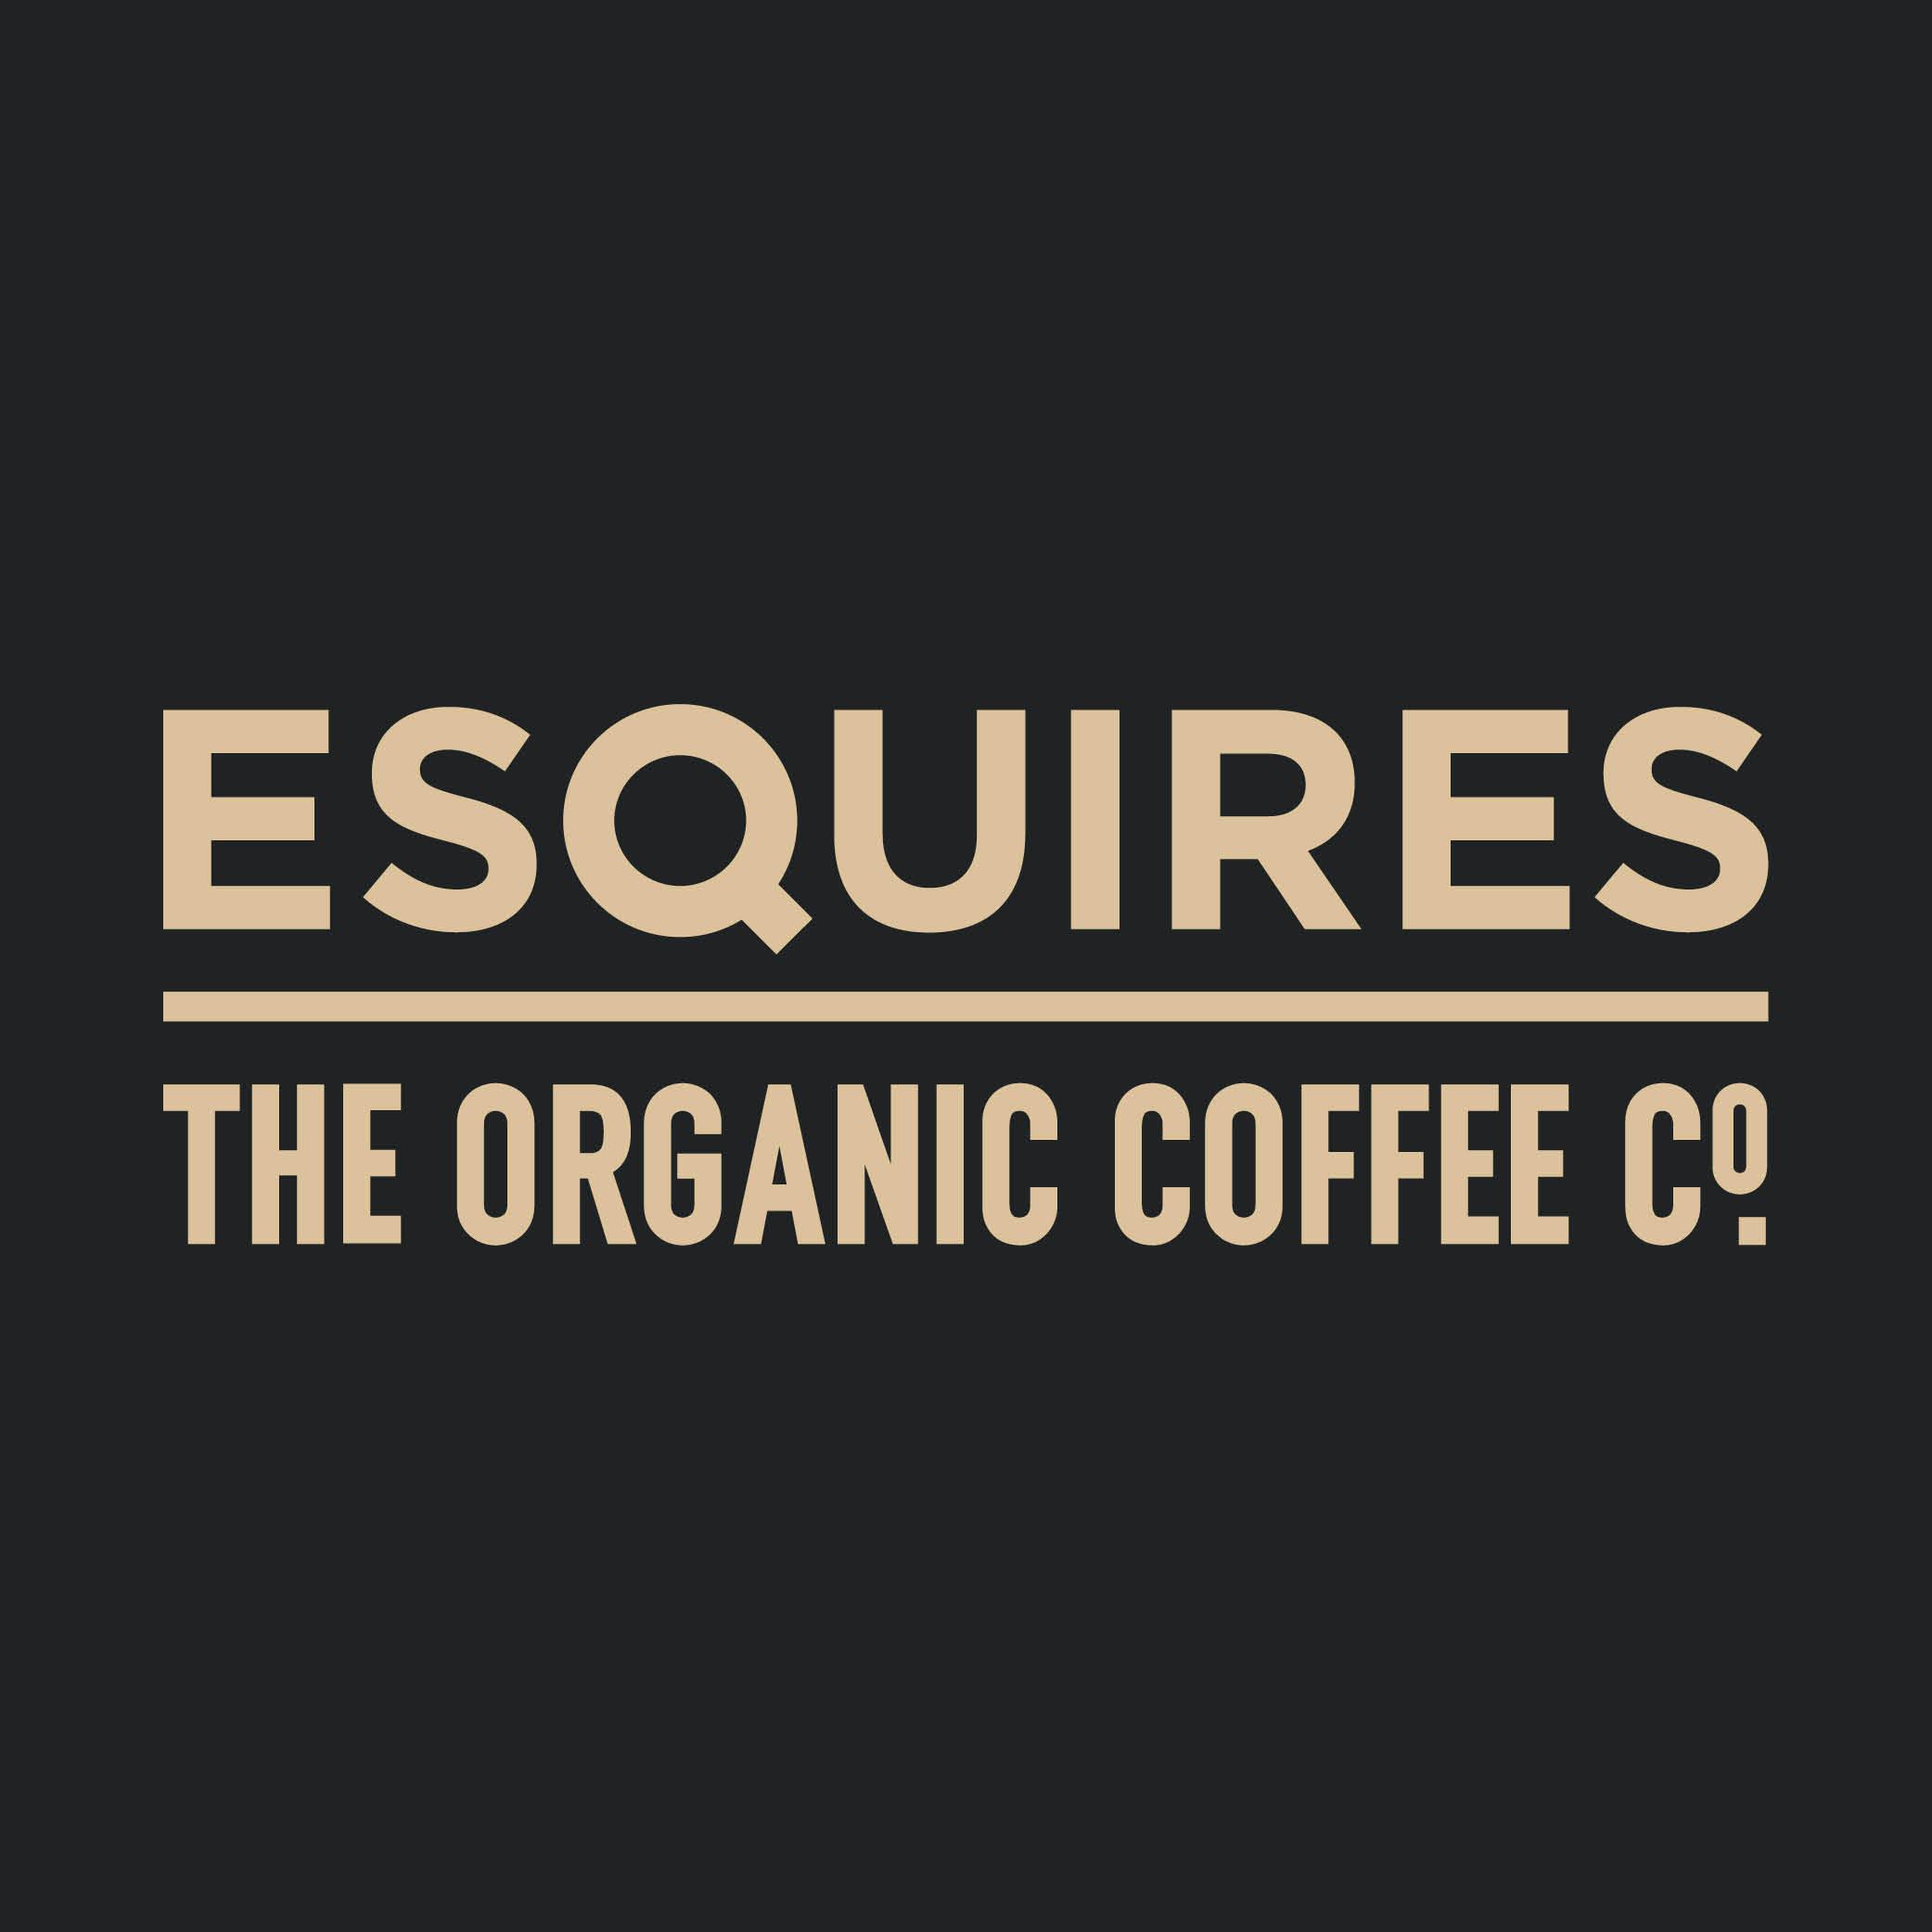 Esquires Coffee Houghton Regis - Dunstable, Bedfordshire LU5 6TW - 07561 769490 | ShowMeLocal.com